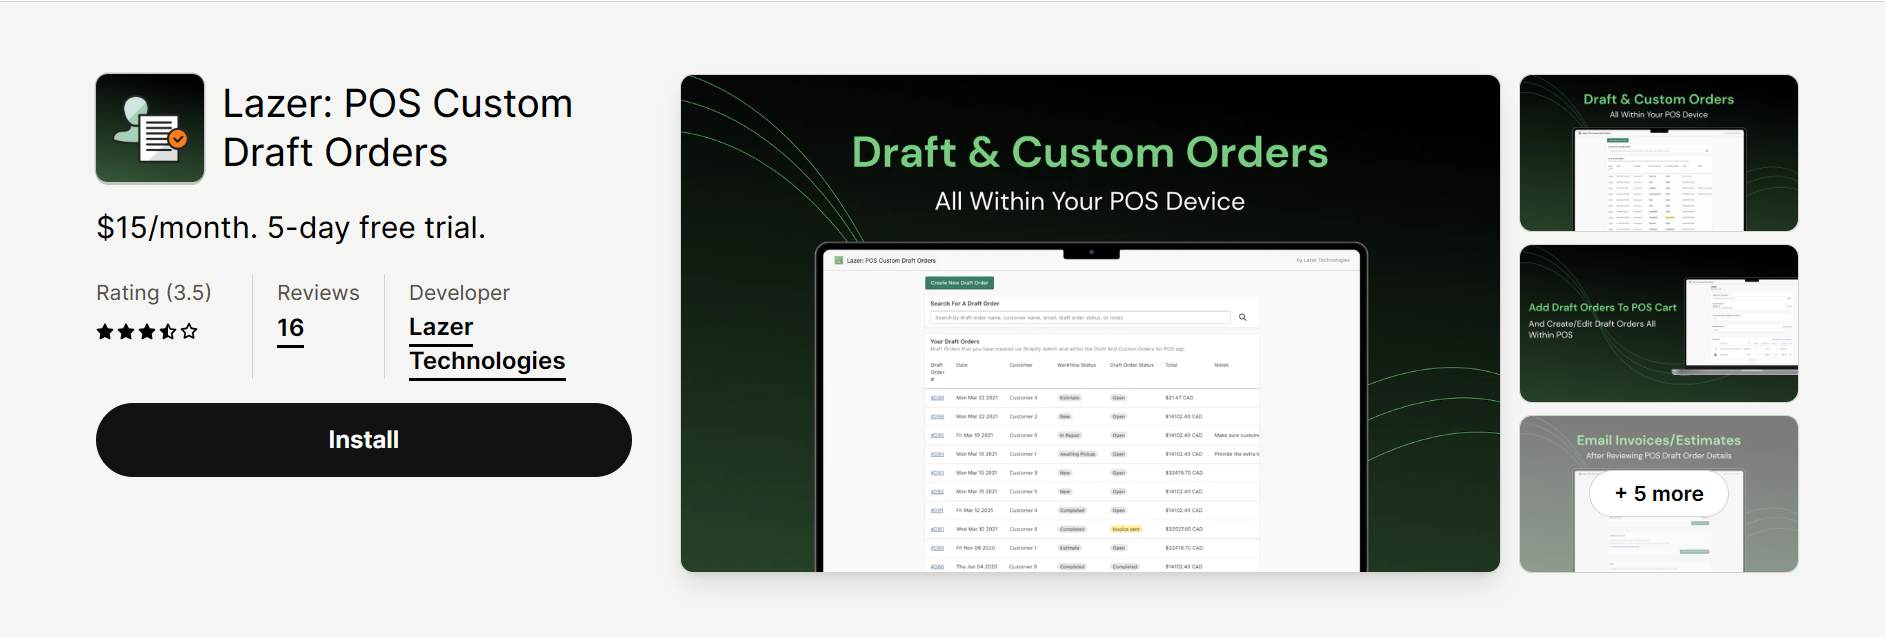 Custom & Draft Orders For POS